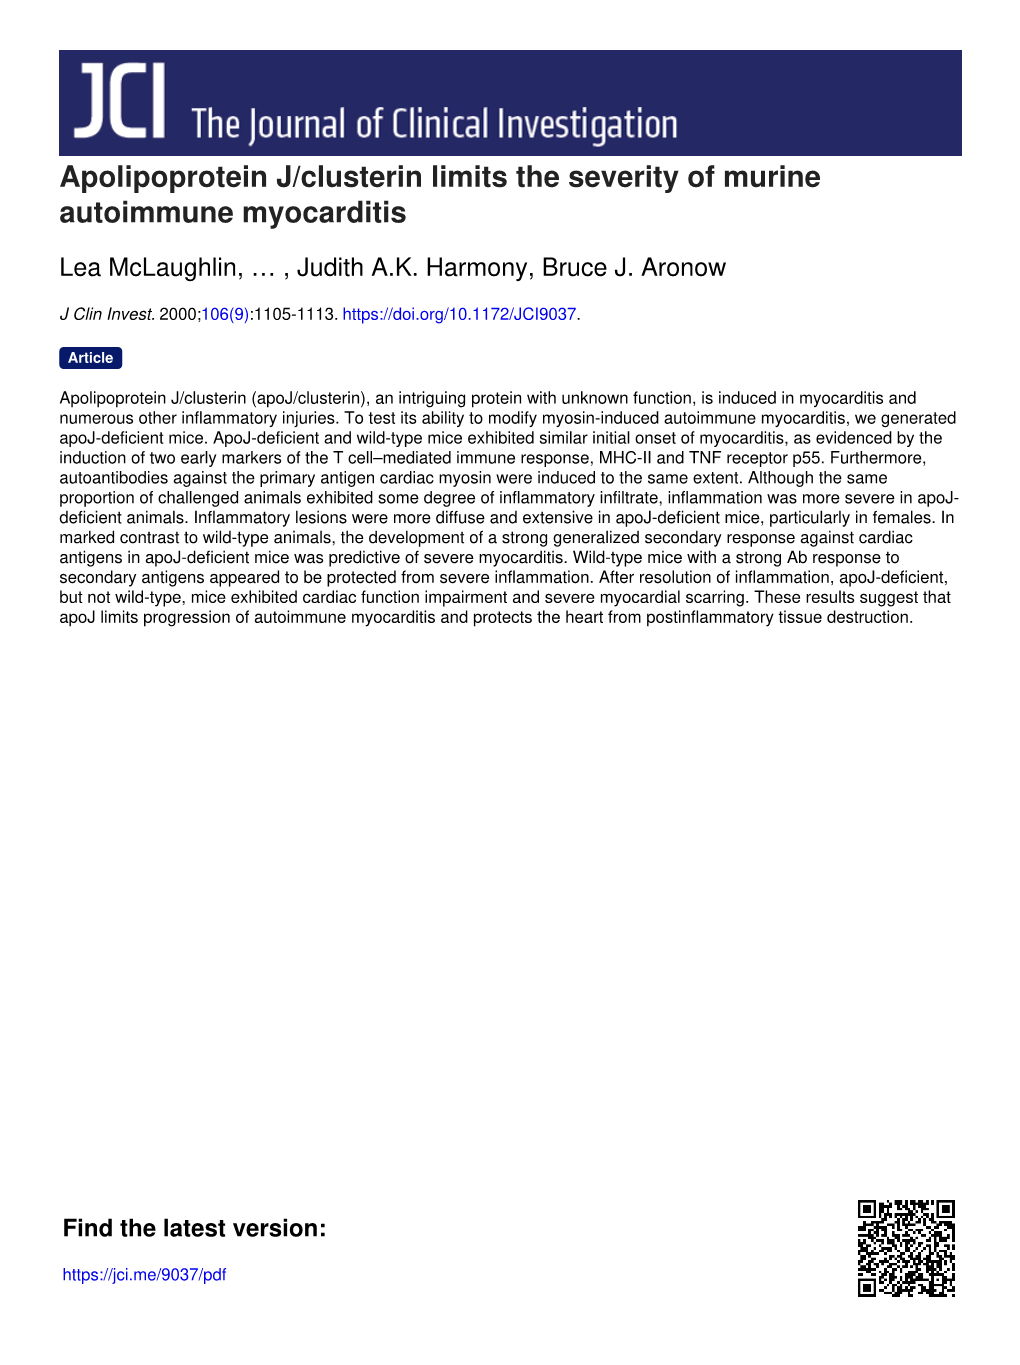 Apolipoprotein J/Clusterin Limits the Severity of Murine Autoimmune Myocarditis